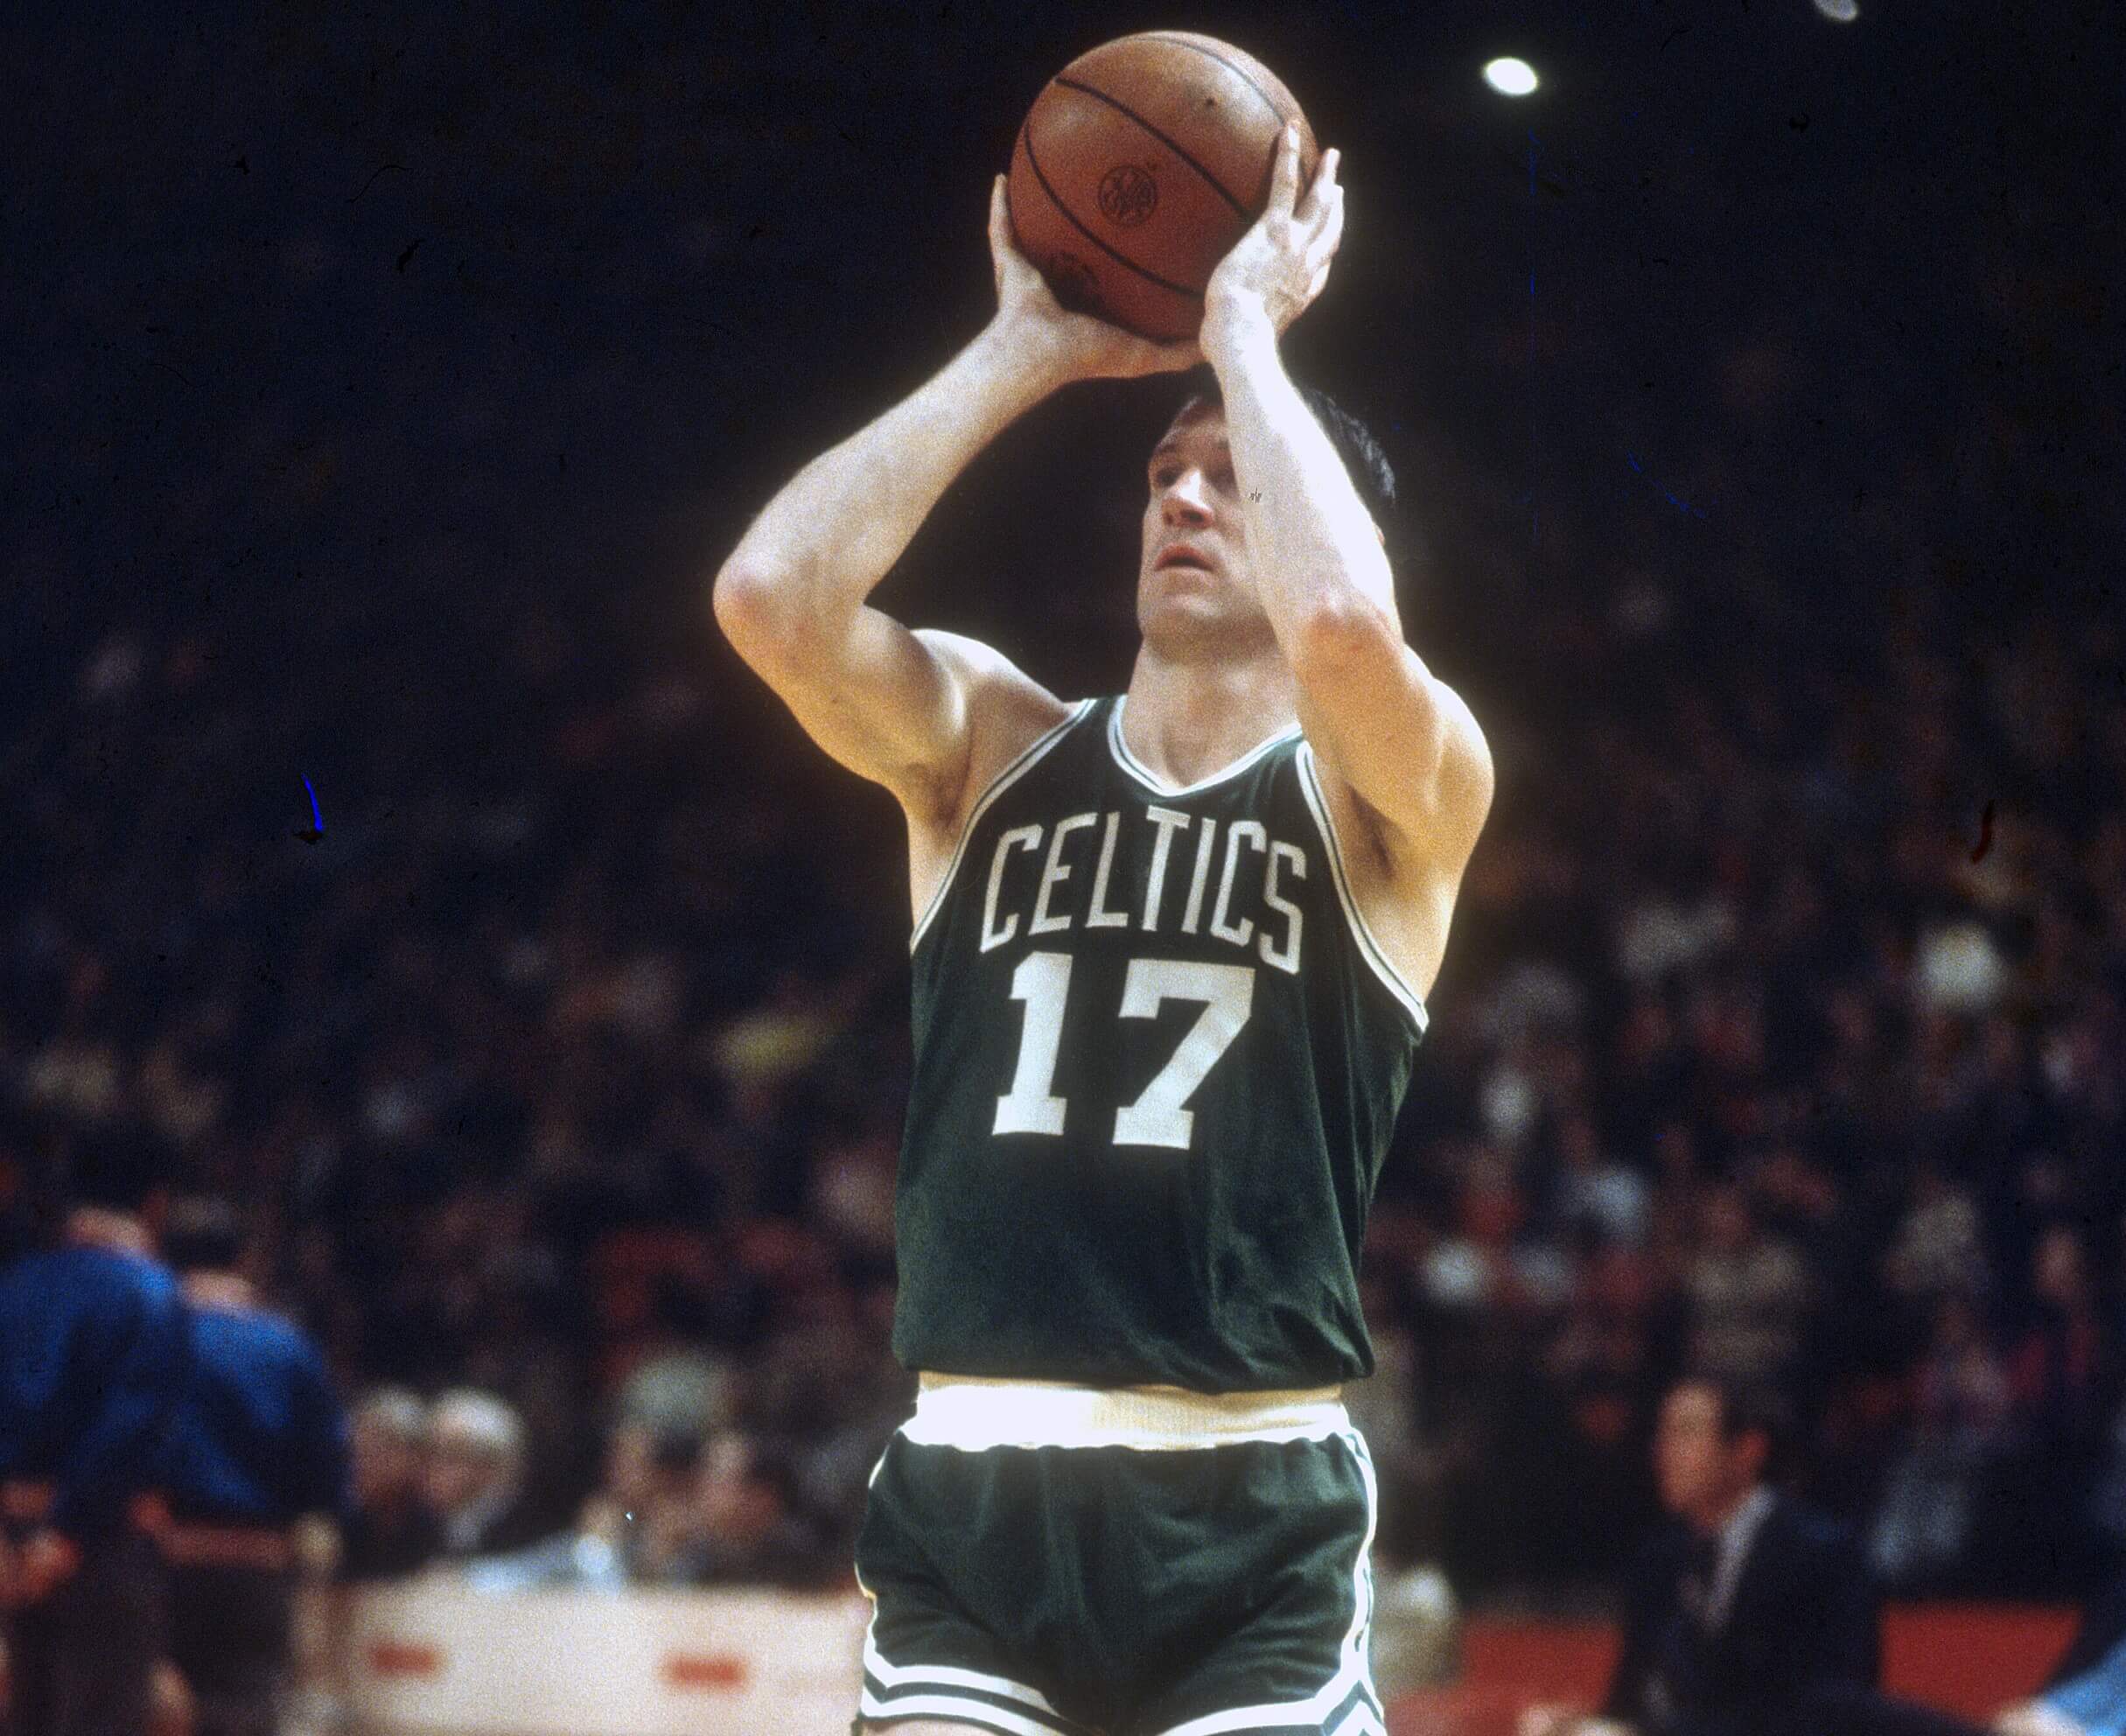 John Havlicek of the Boston Celtics shoots against the Washington Bullets.